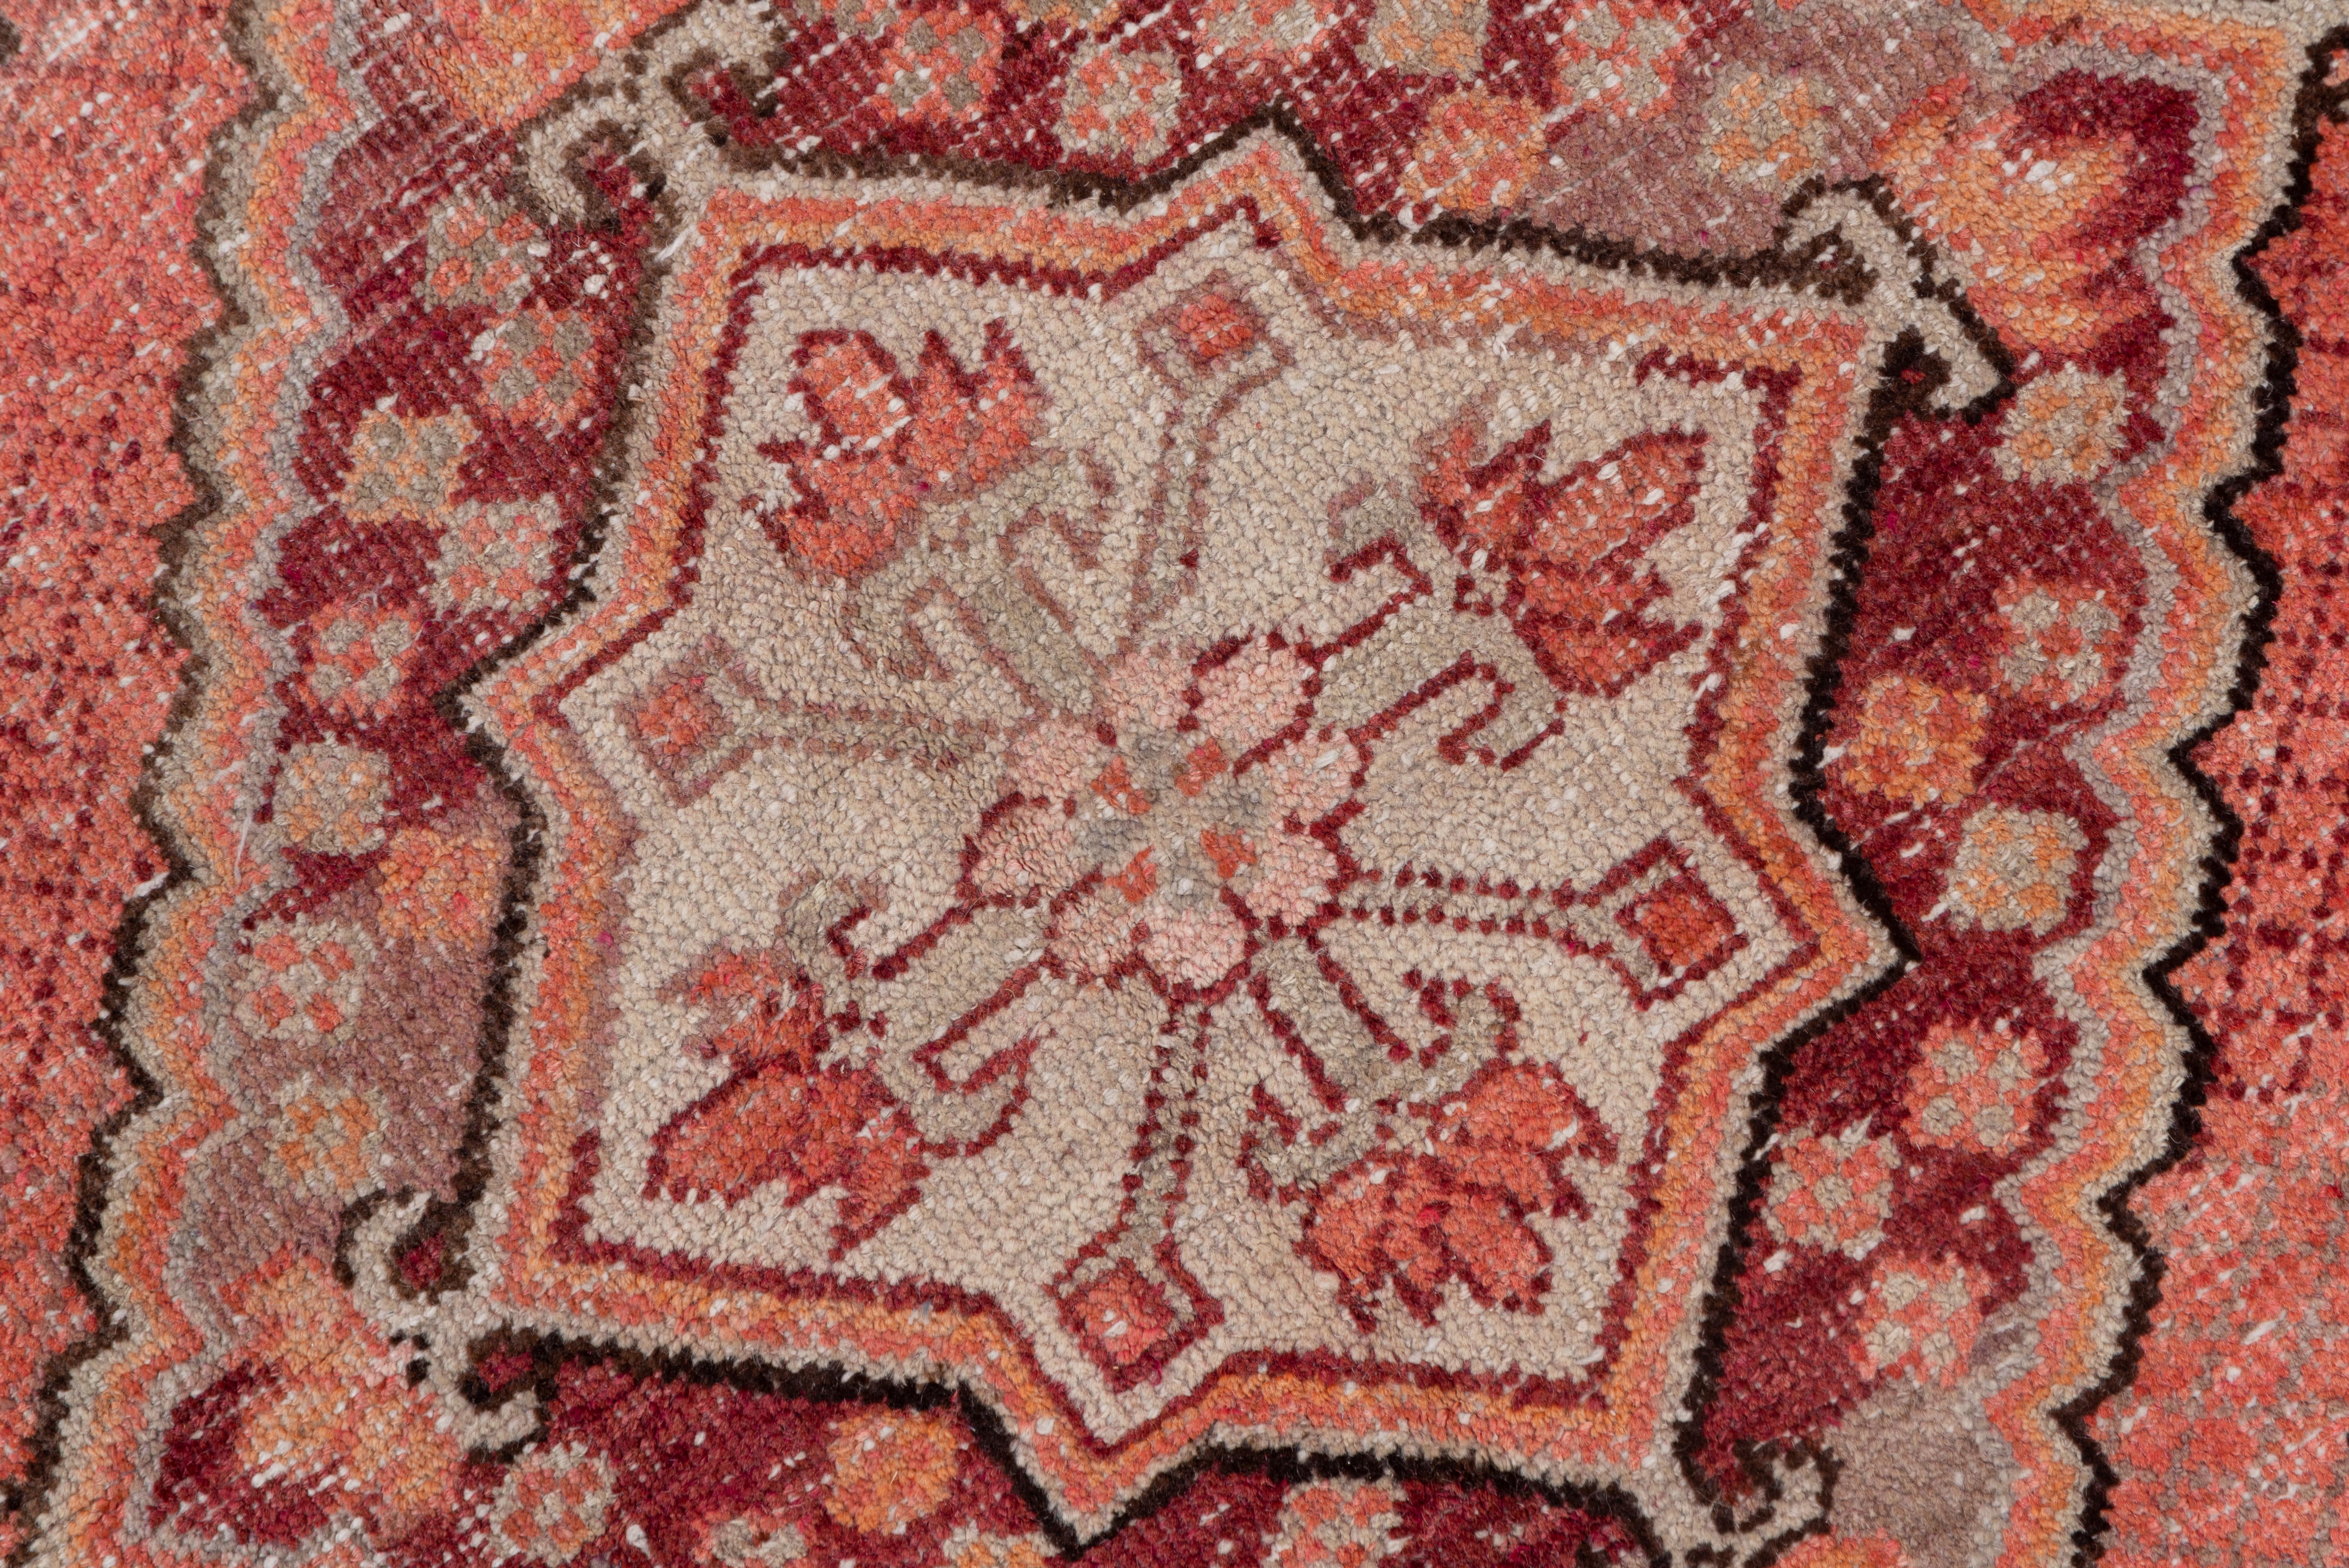 20th Century Antique Khotan Rug - Red Hues, Triangular Detailing For Sale